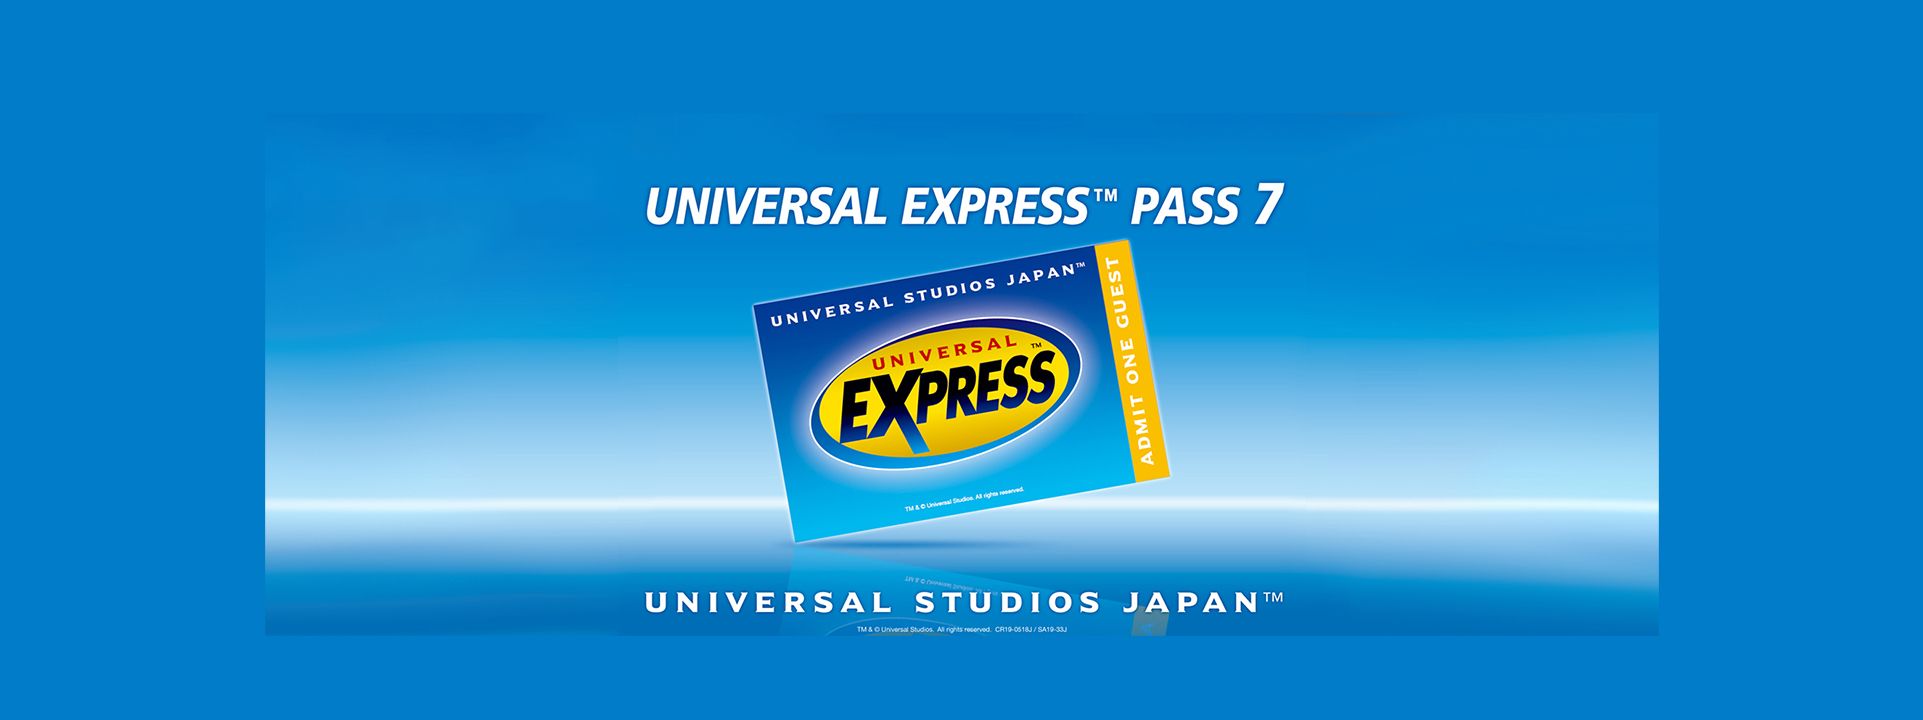 Imagen del tour: Express™ Pass 7 para Universal Studios Japón